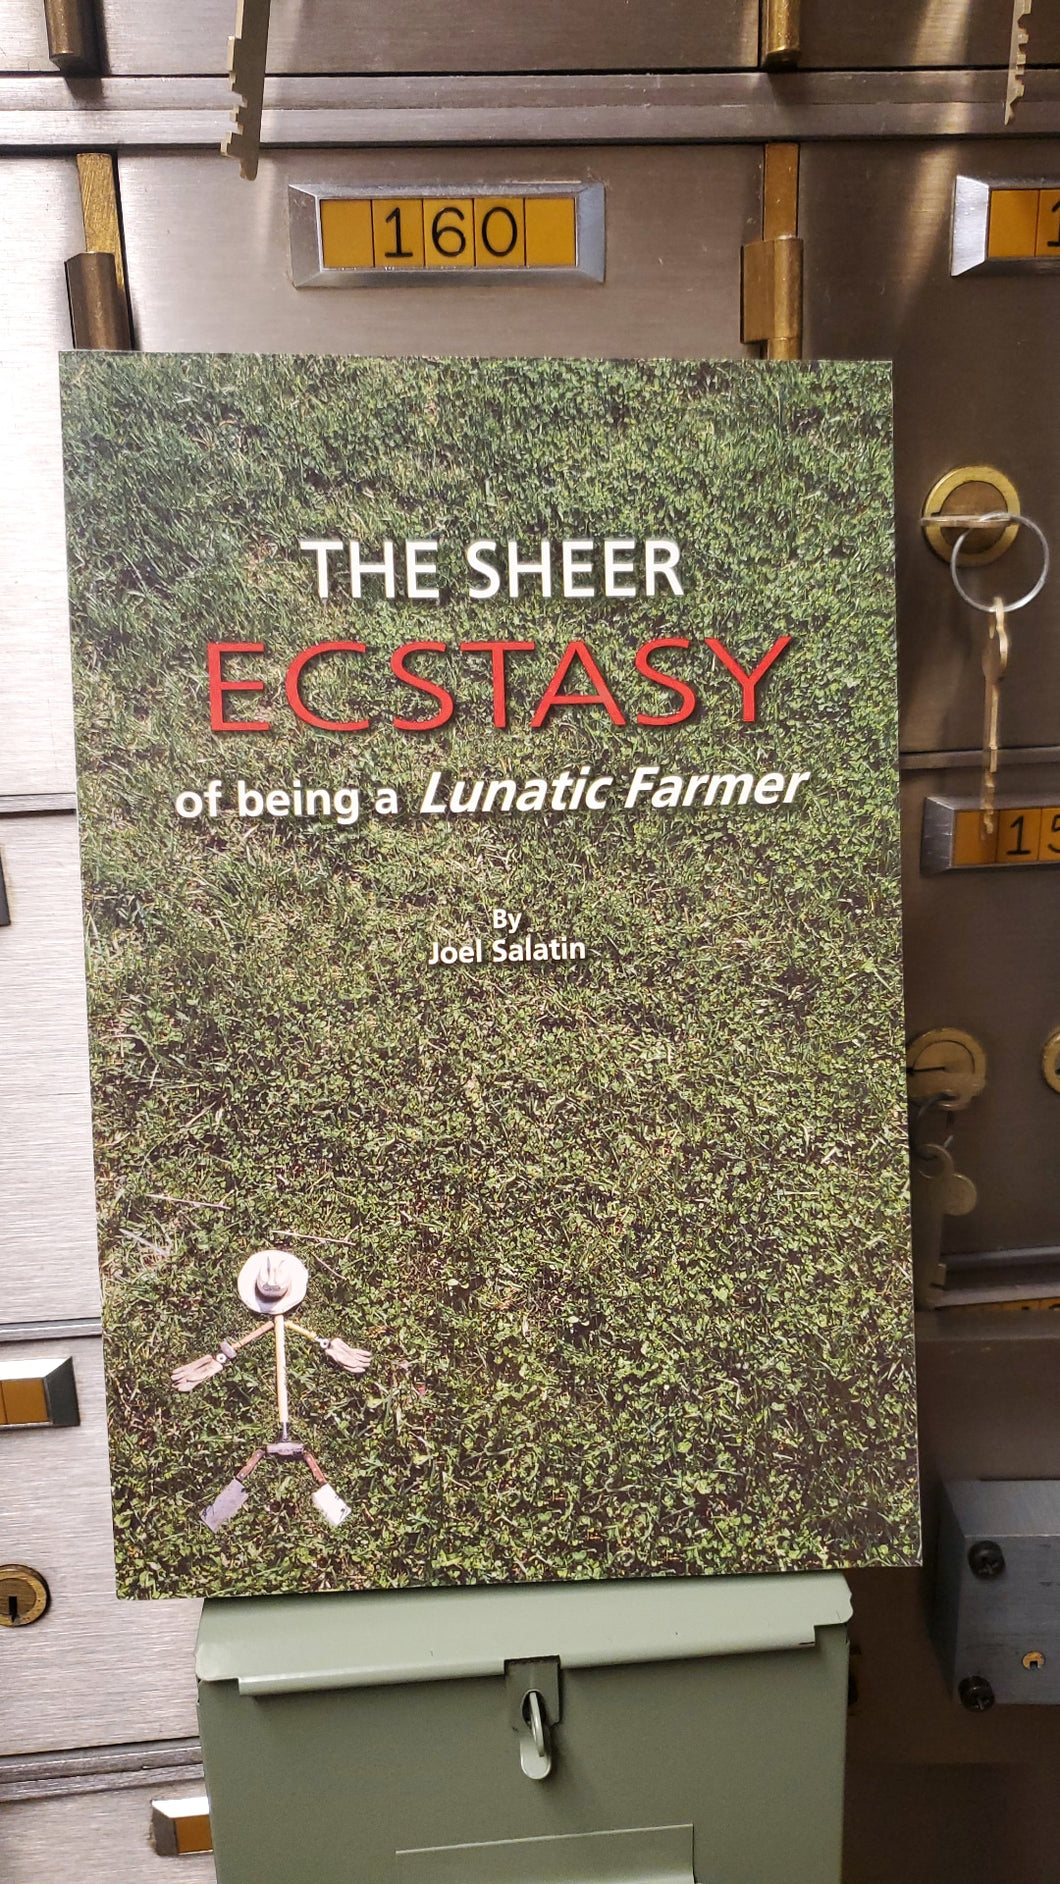 Sheer Ecstasy of Being a Lunatic Farmer